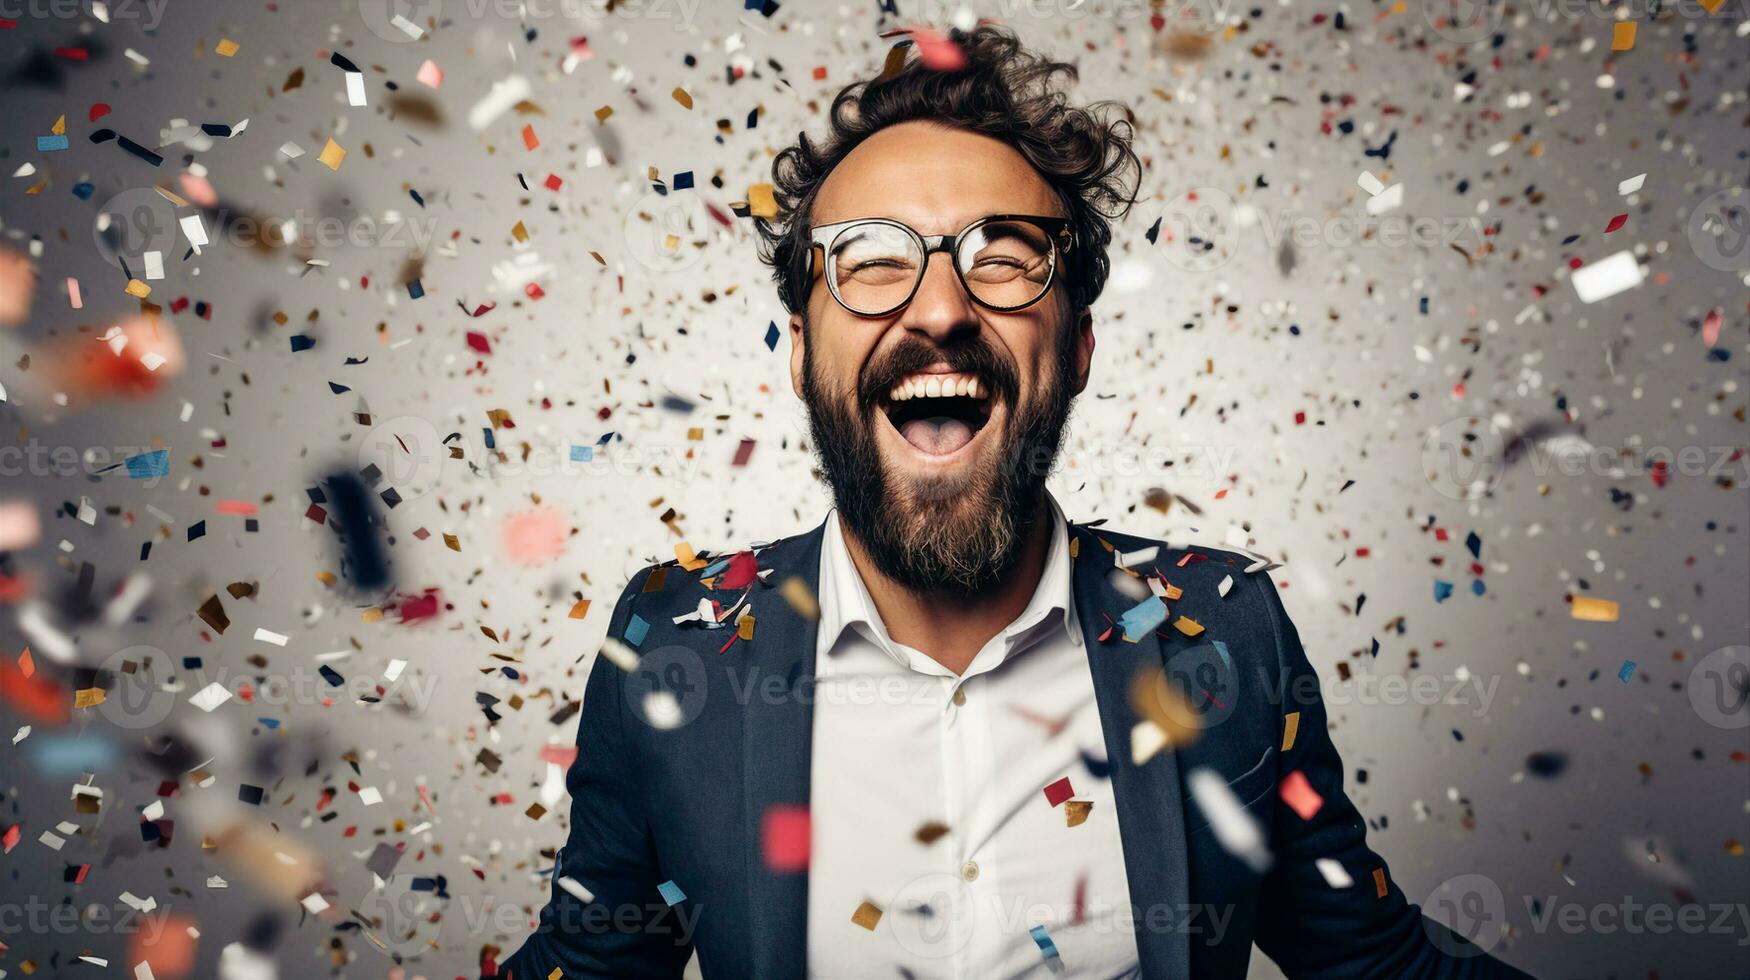 Joyful man in formal attire amidst a celebratory confetti shower, exuding happiness and confidence. Generative AI photo